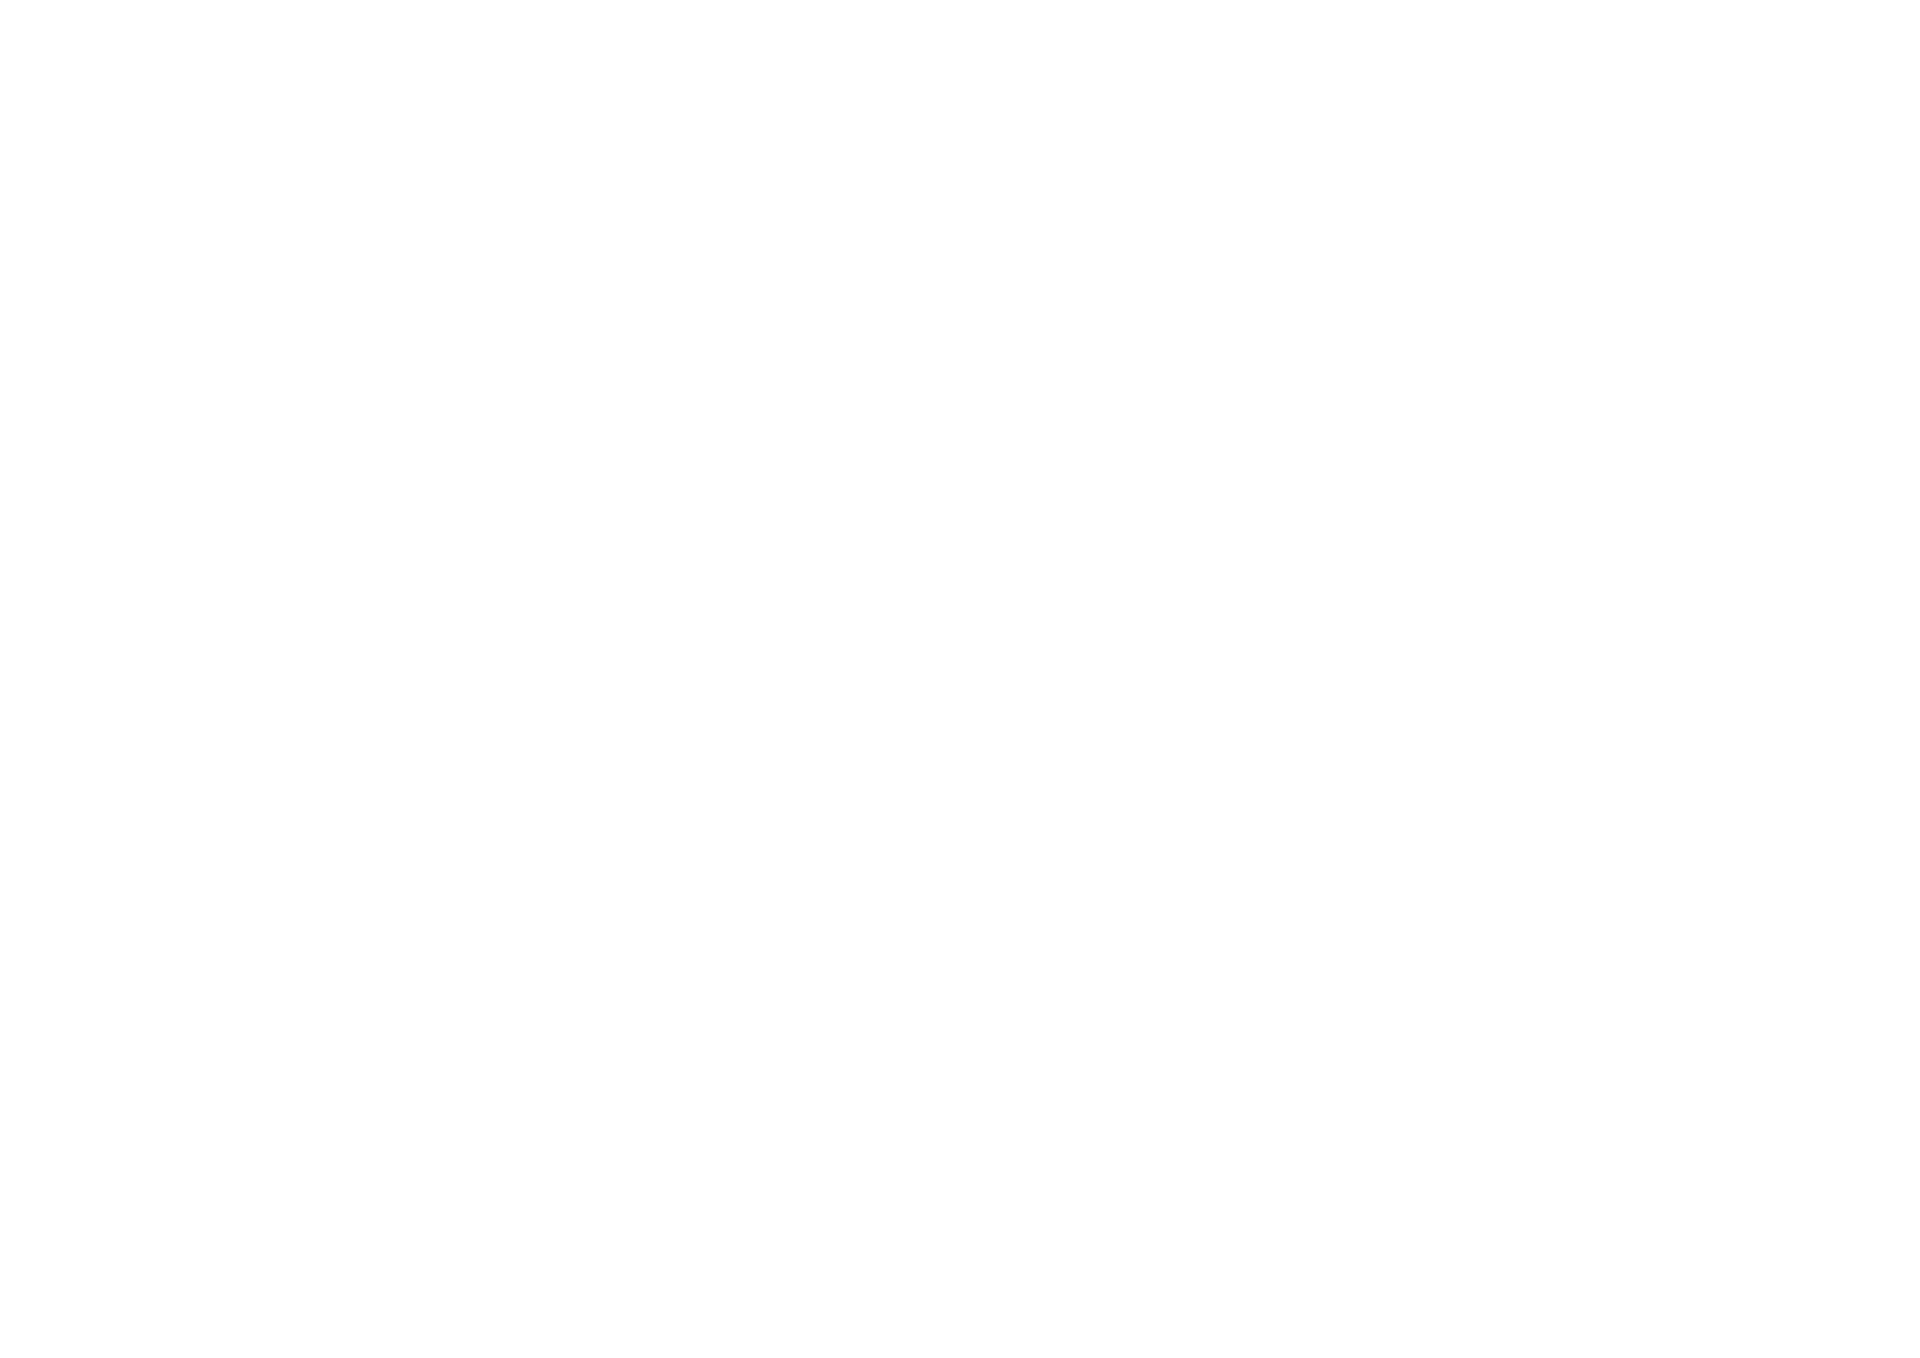 go-e logo white